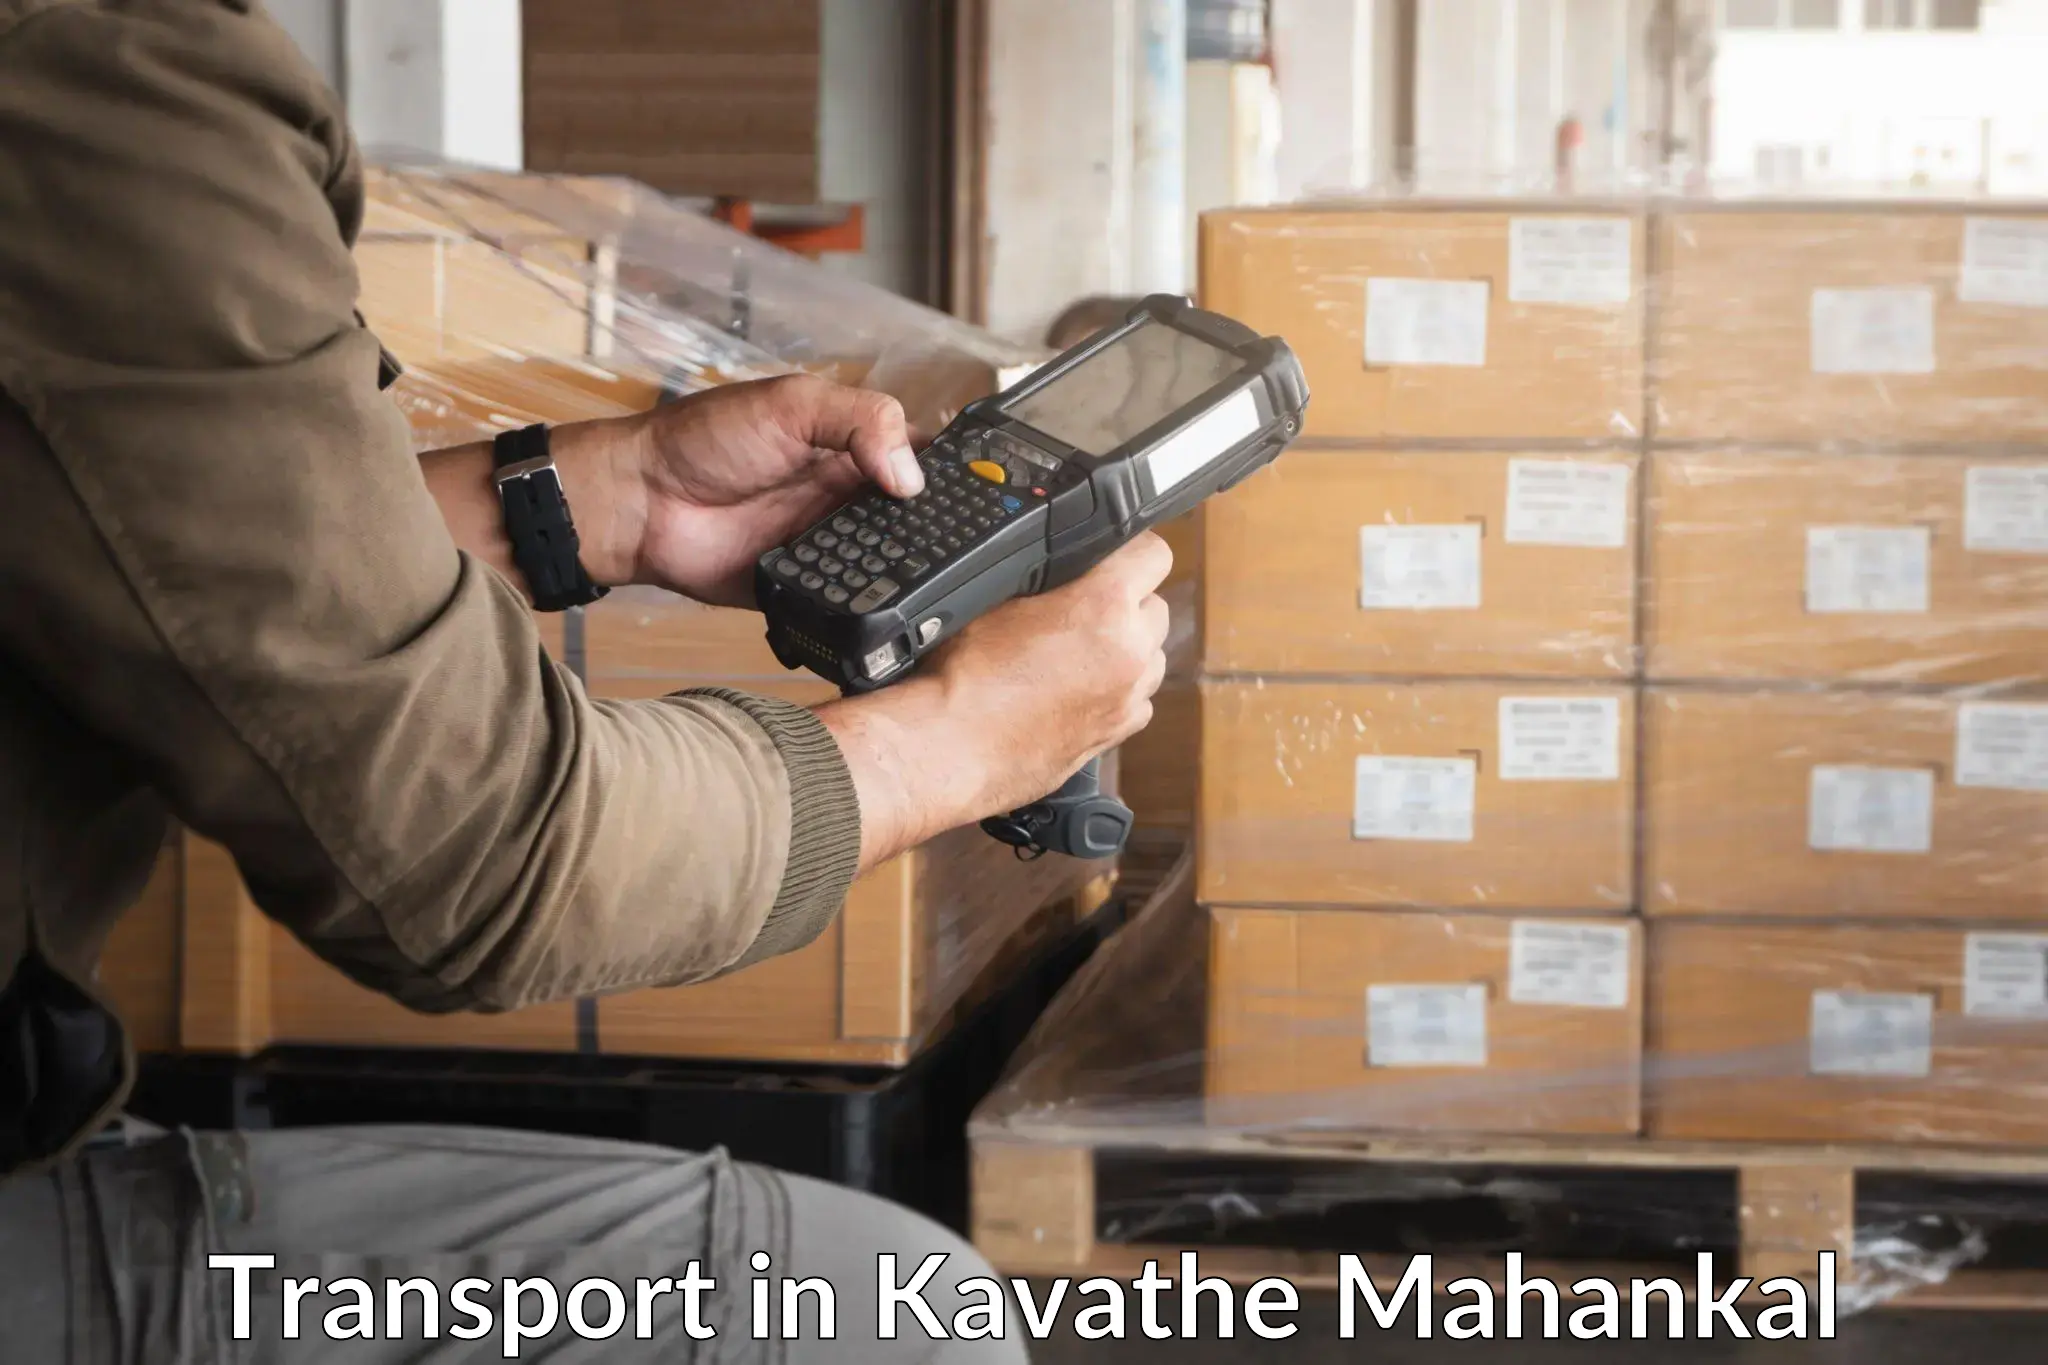 Interstate goods transport in Kavathe Mahankal